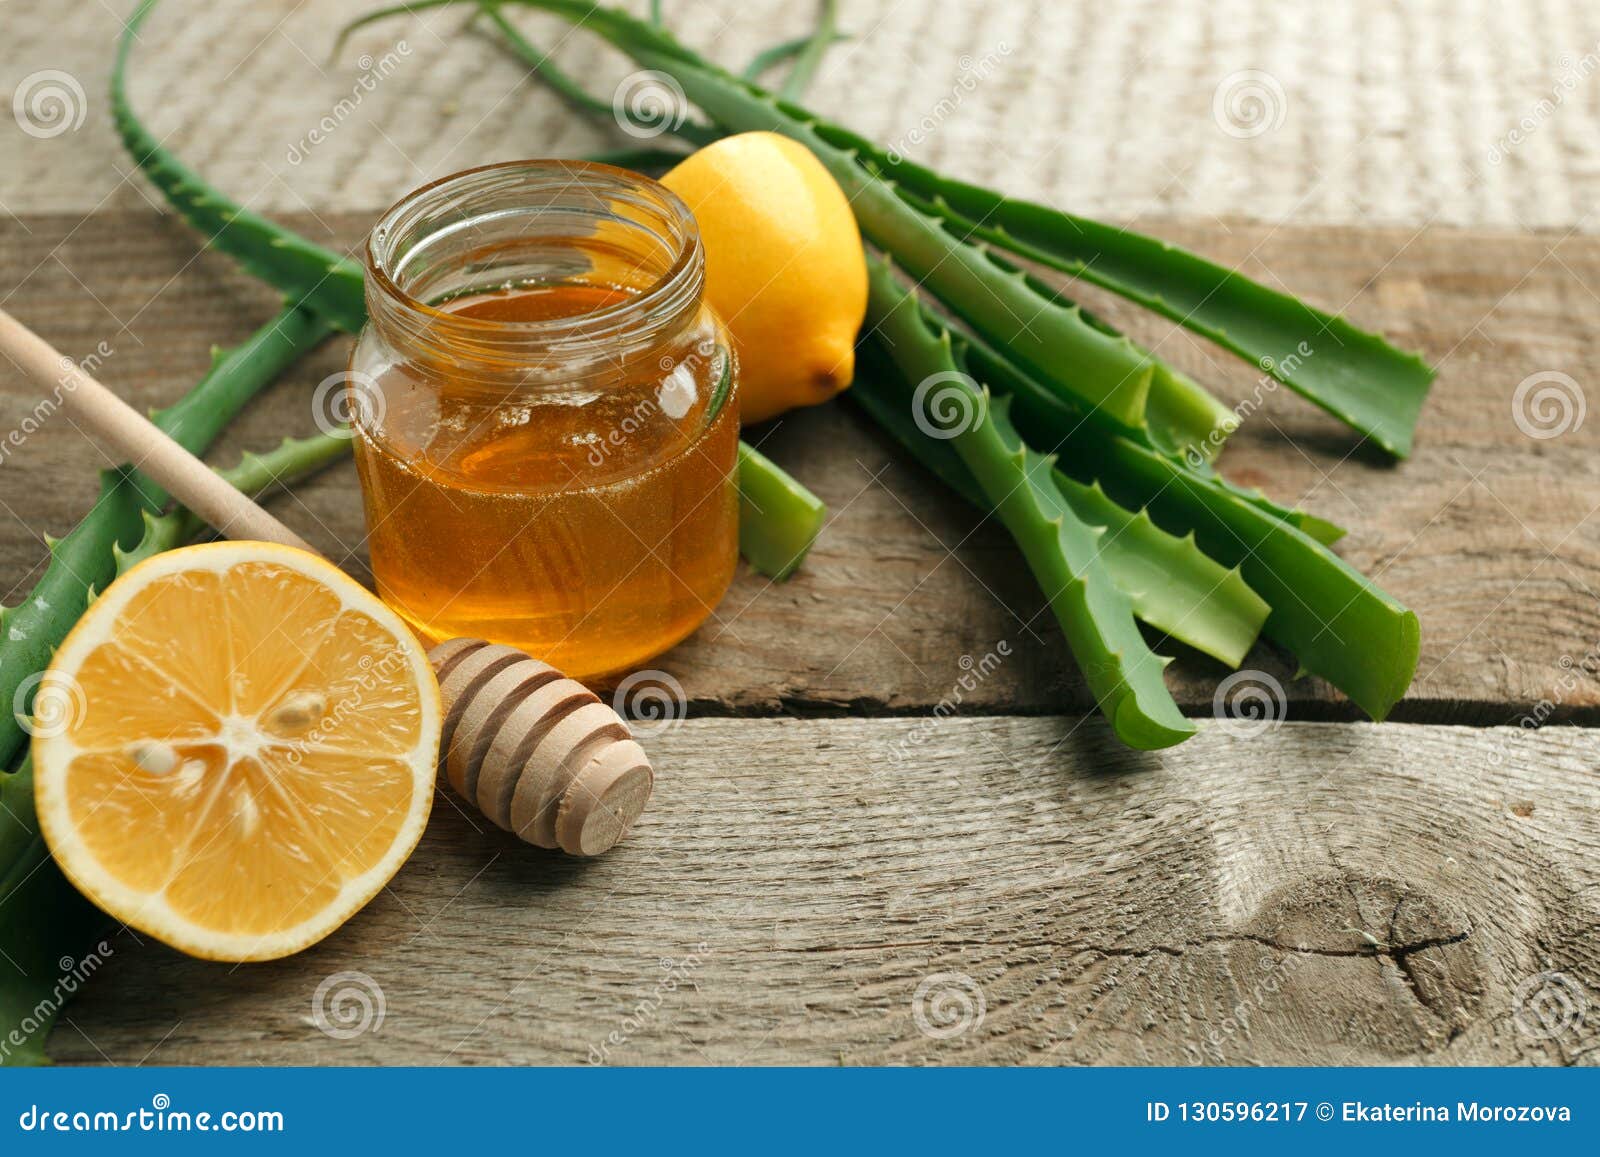 Aloe Vera, Fresh Lemon and Honey. Natural Facial, Skin and Hair Care Recipe.  Stock Image - Image of cosmetic, dermatology: 130596217